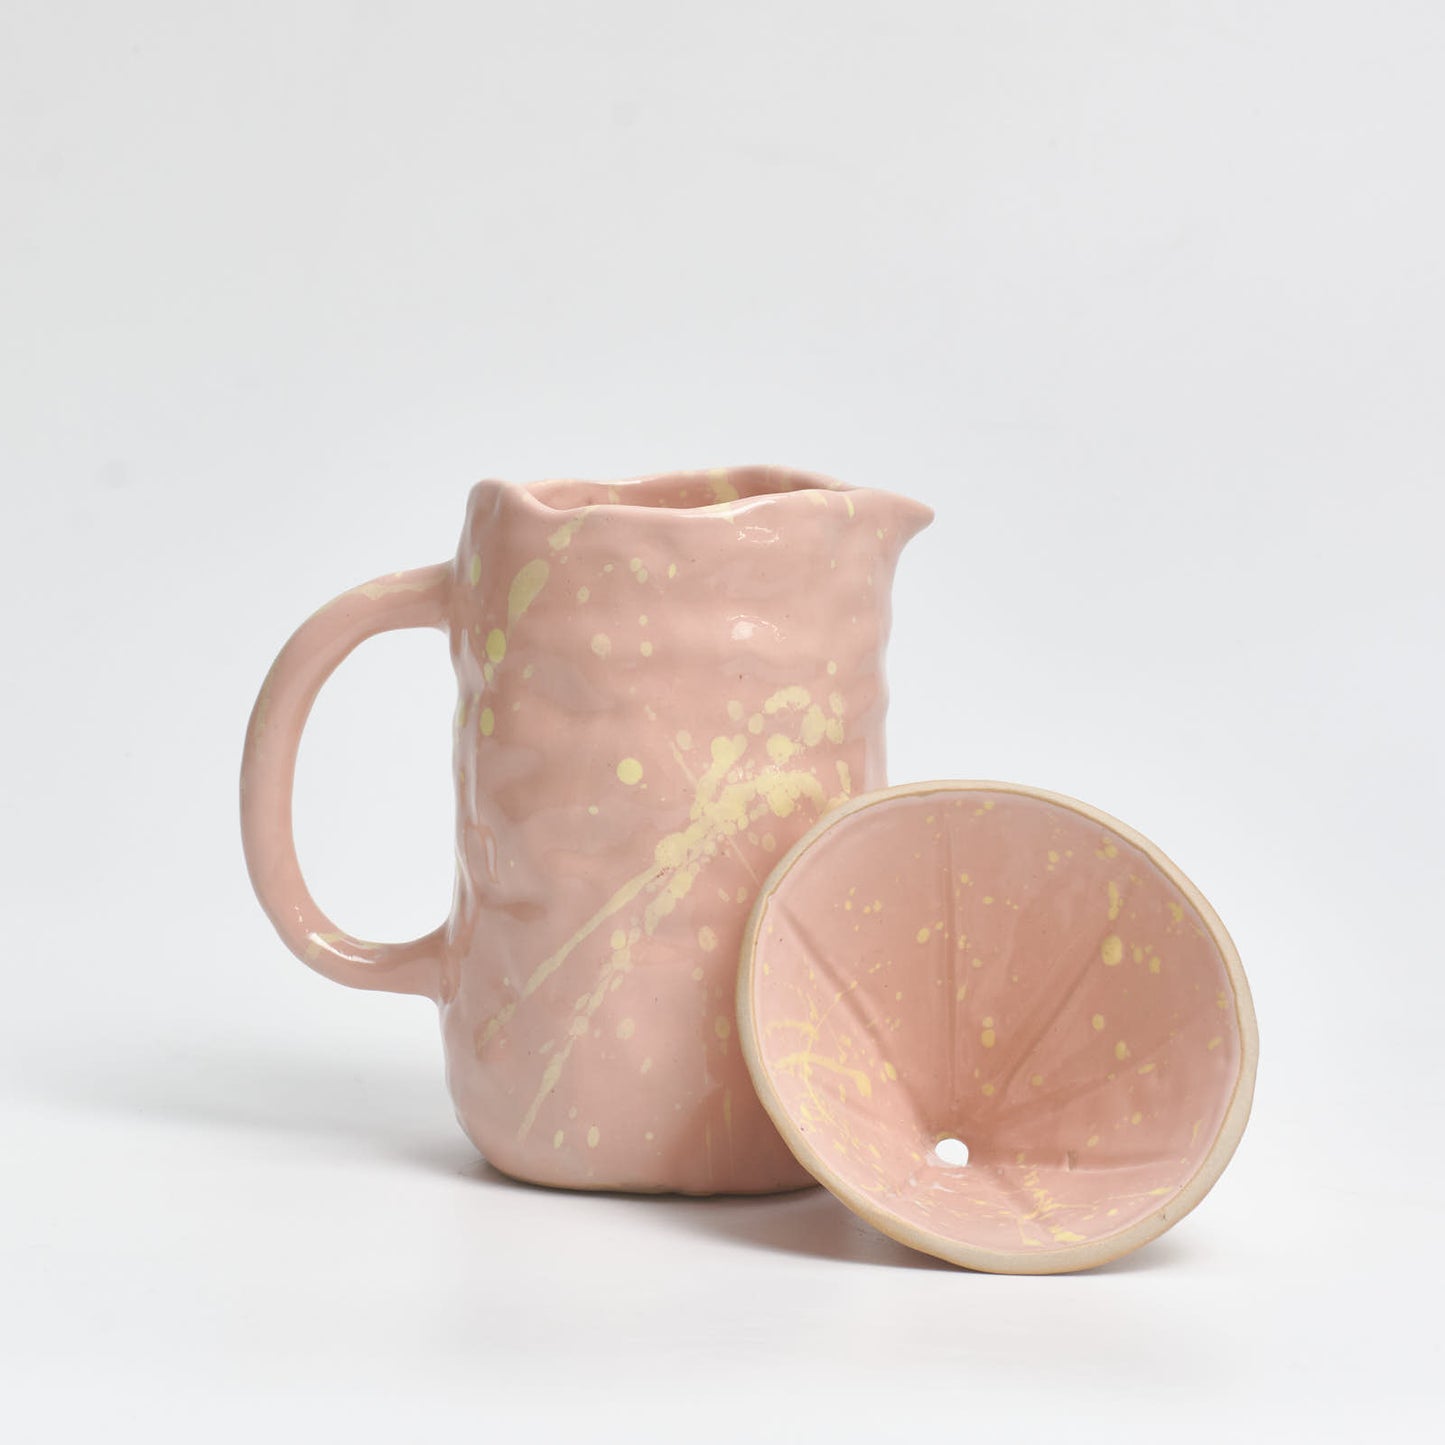 Clay Coffee Drip "Sunny" by Siup Studio a soft pink glaze with striking yellow spritz